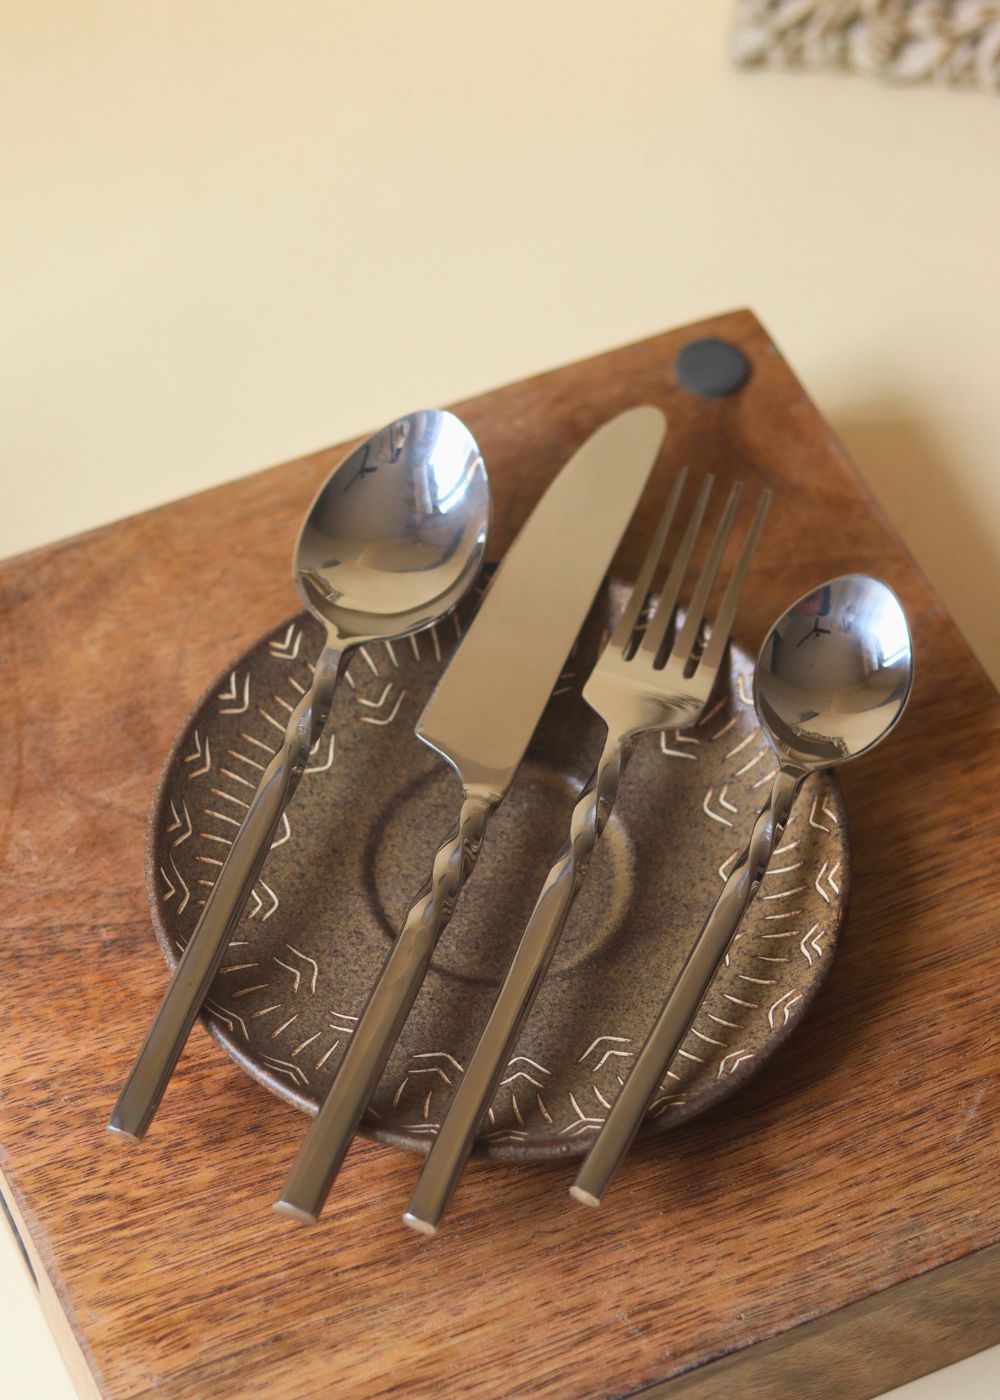 Stunning design handmade cutlery set